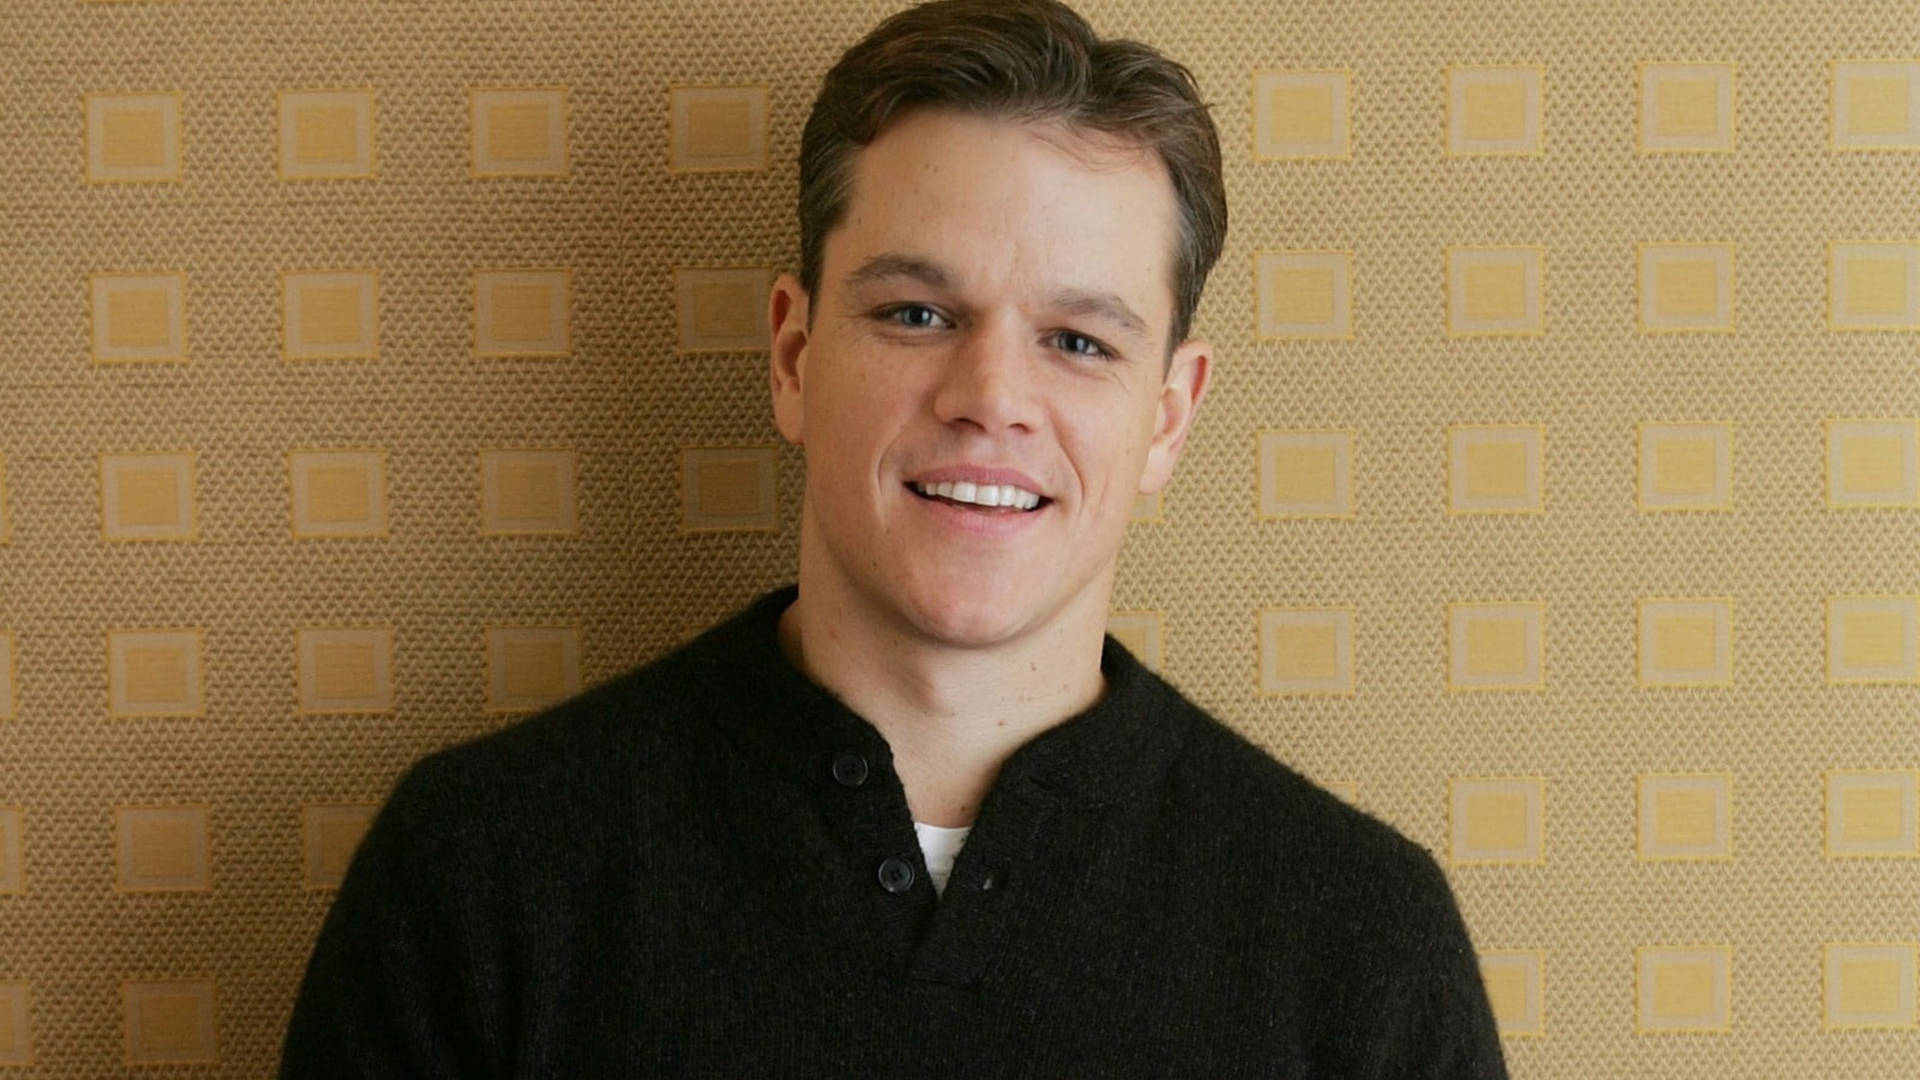 Matt Damon Mid-Parted Hair Wallpaper